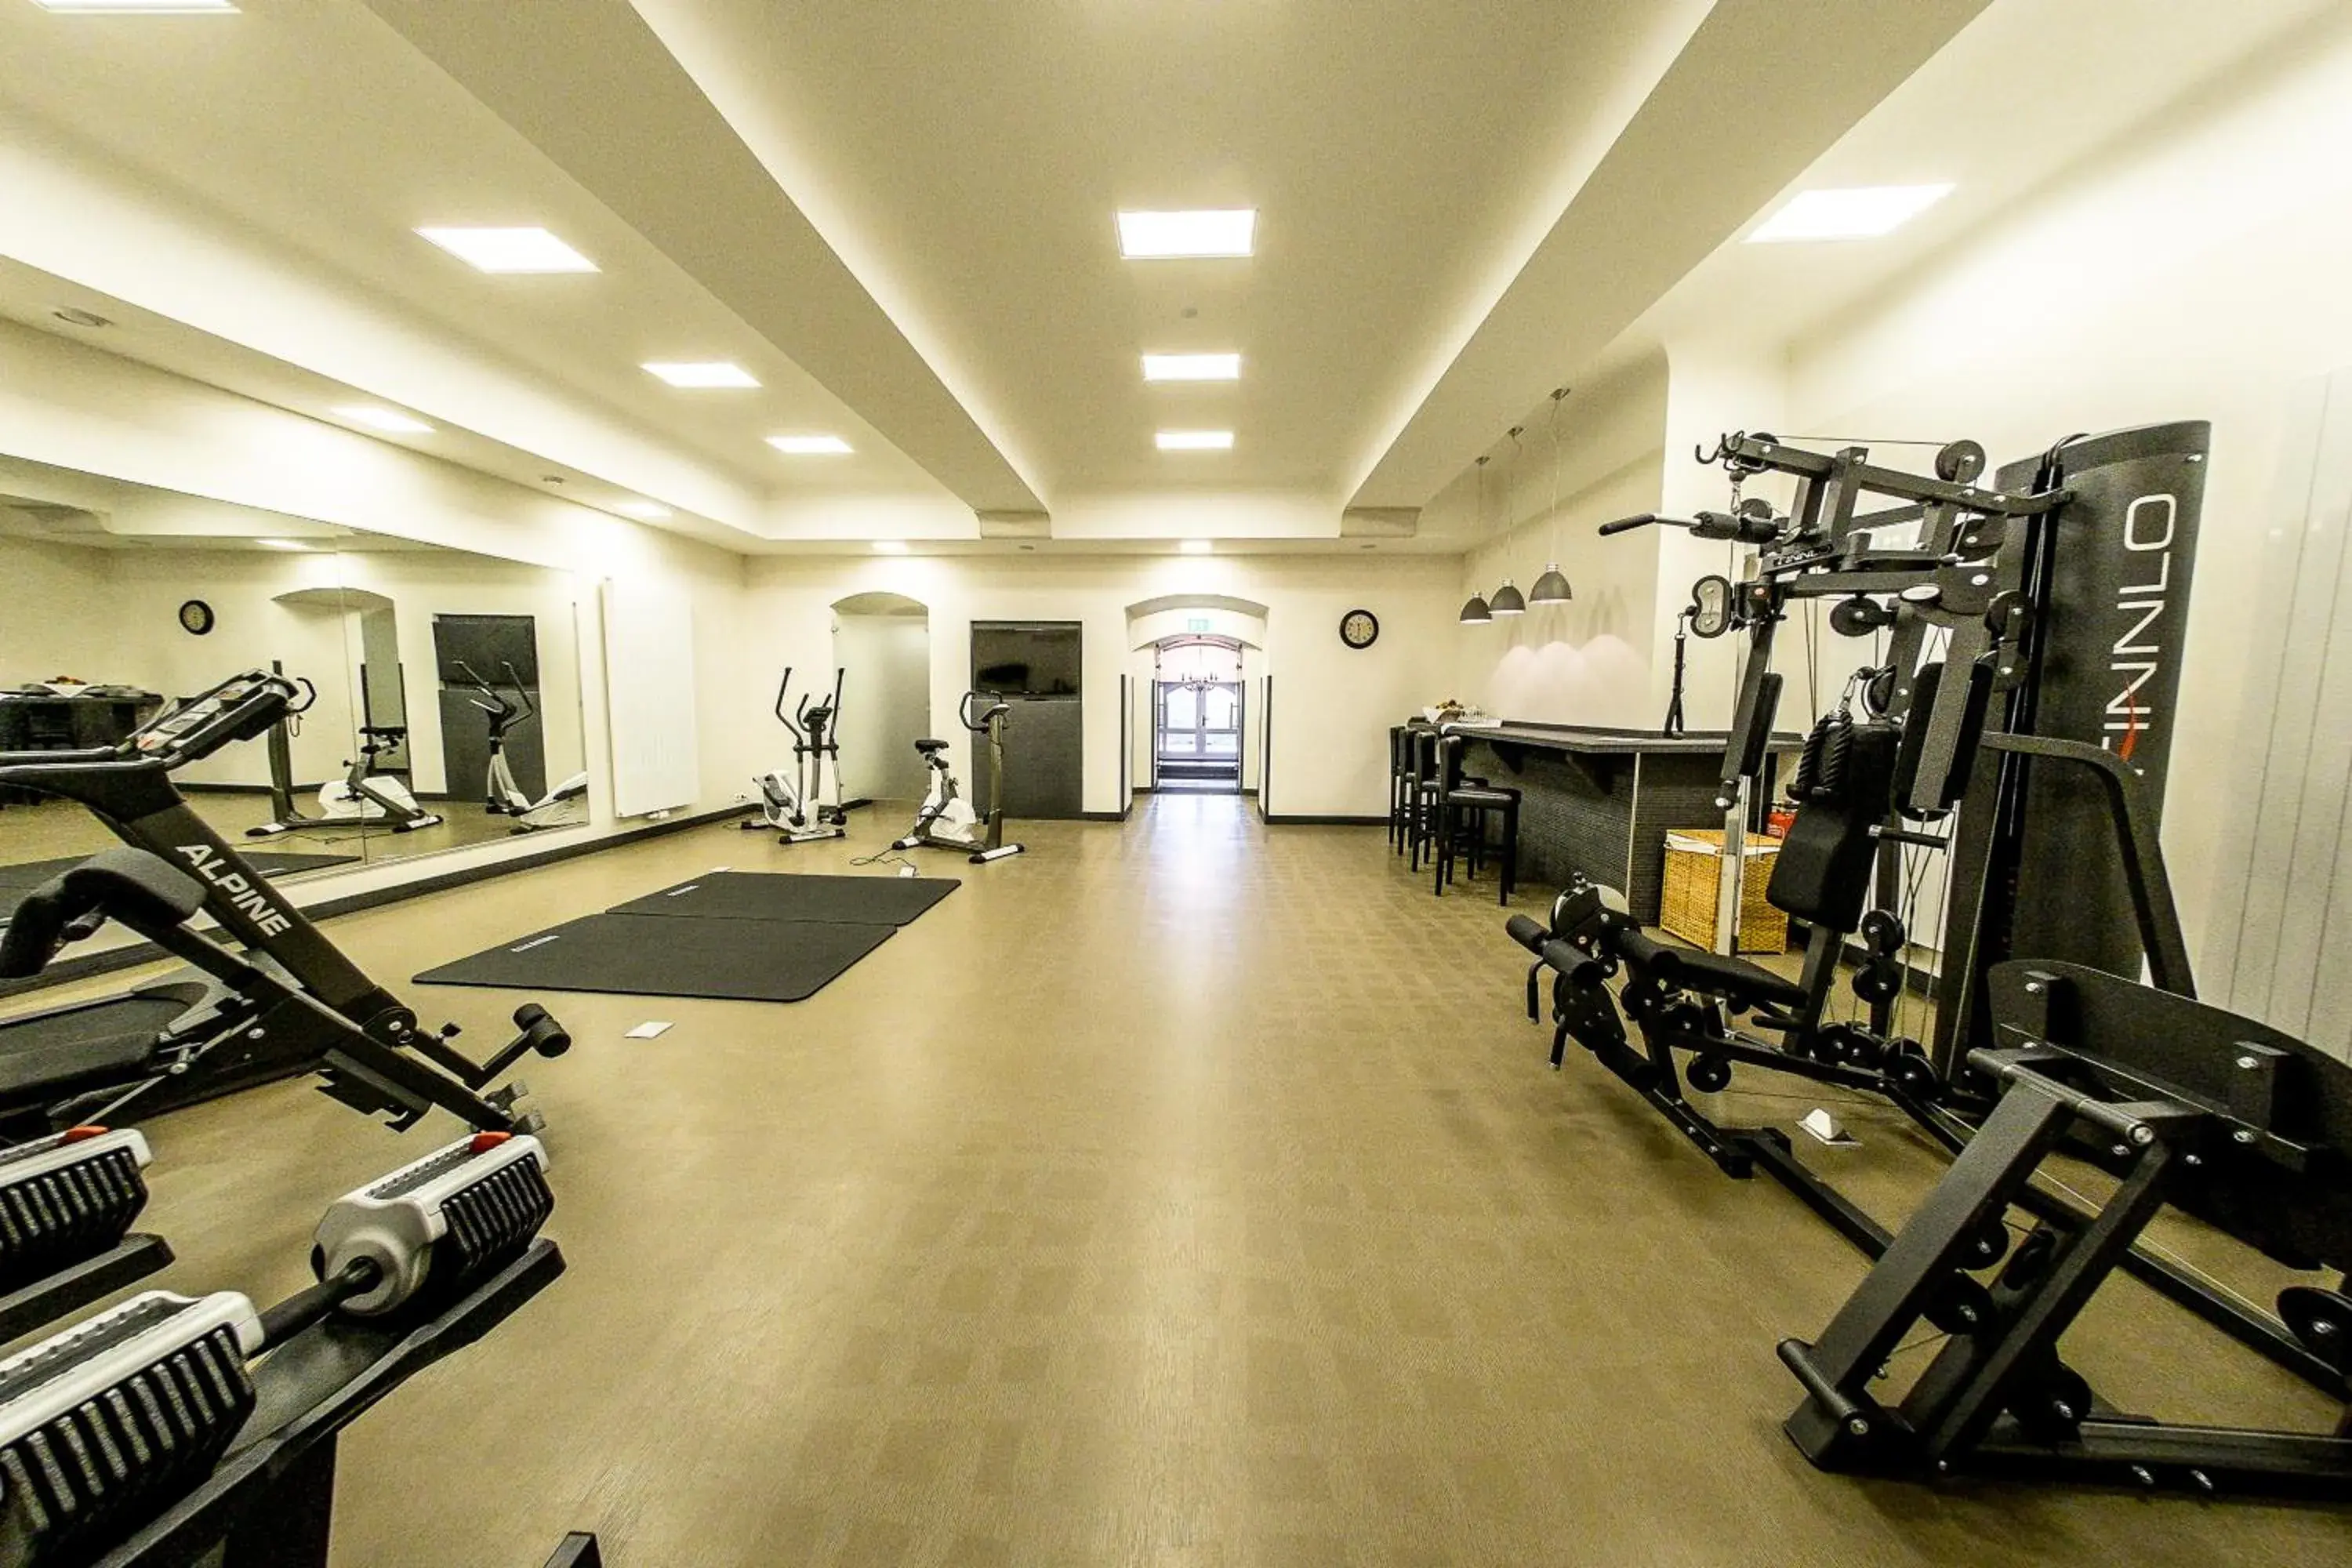 Fitness centre/facilities, Fitness Center/Facilities in Schloss Hotel Wolfsbrunnen